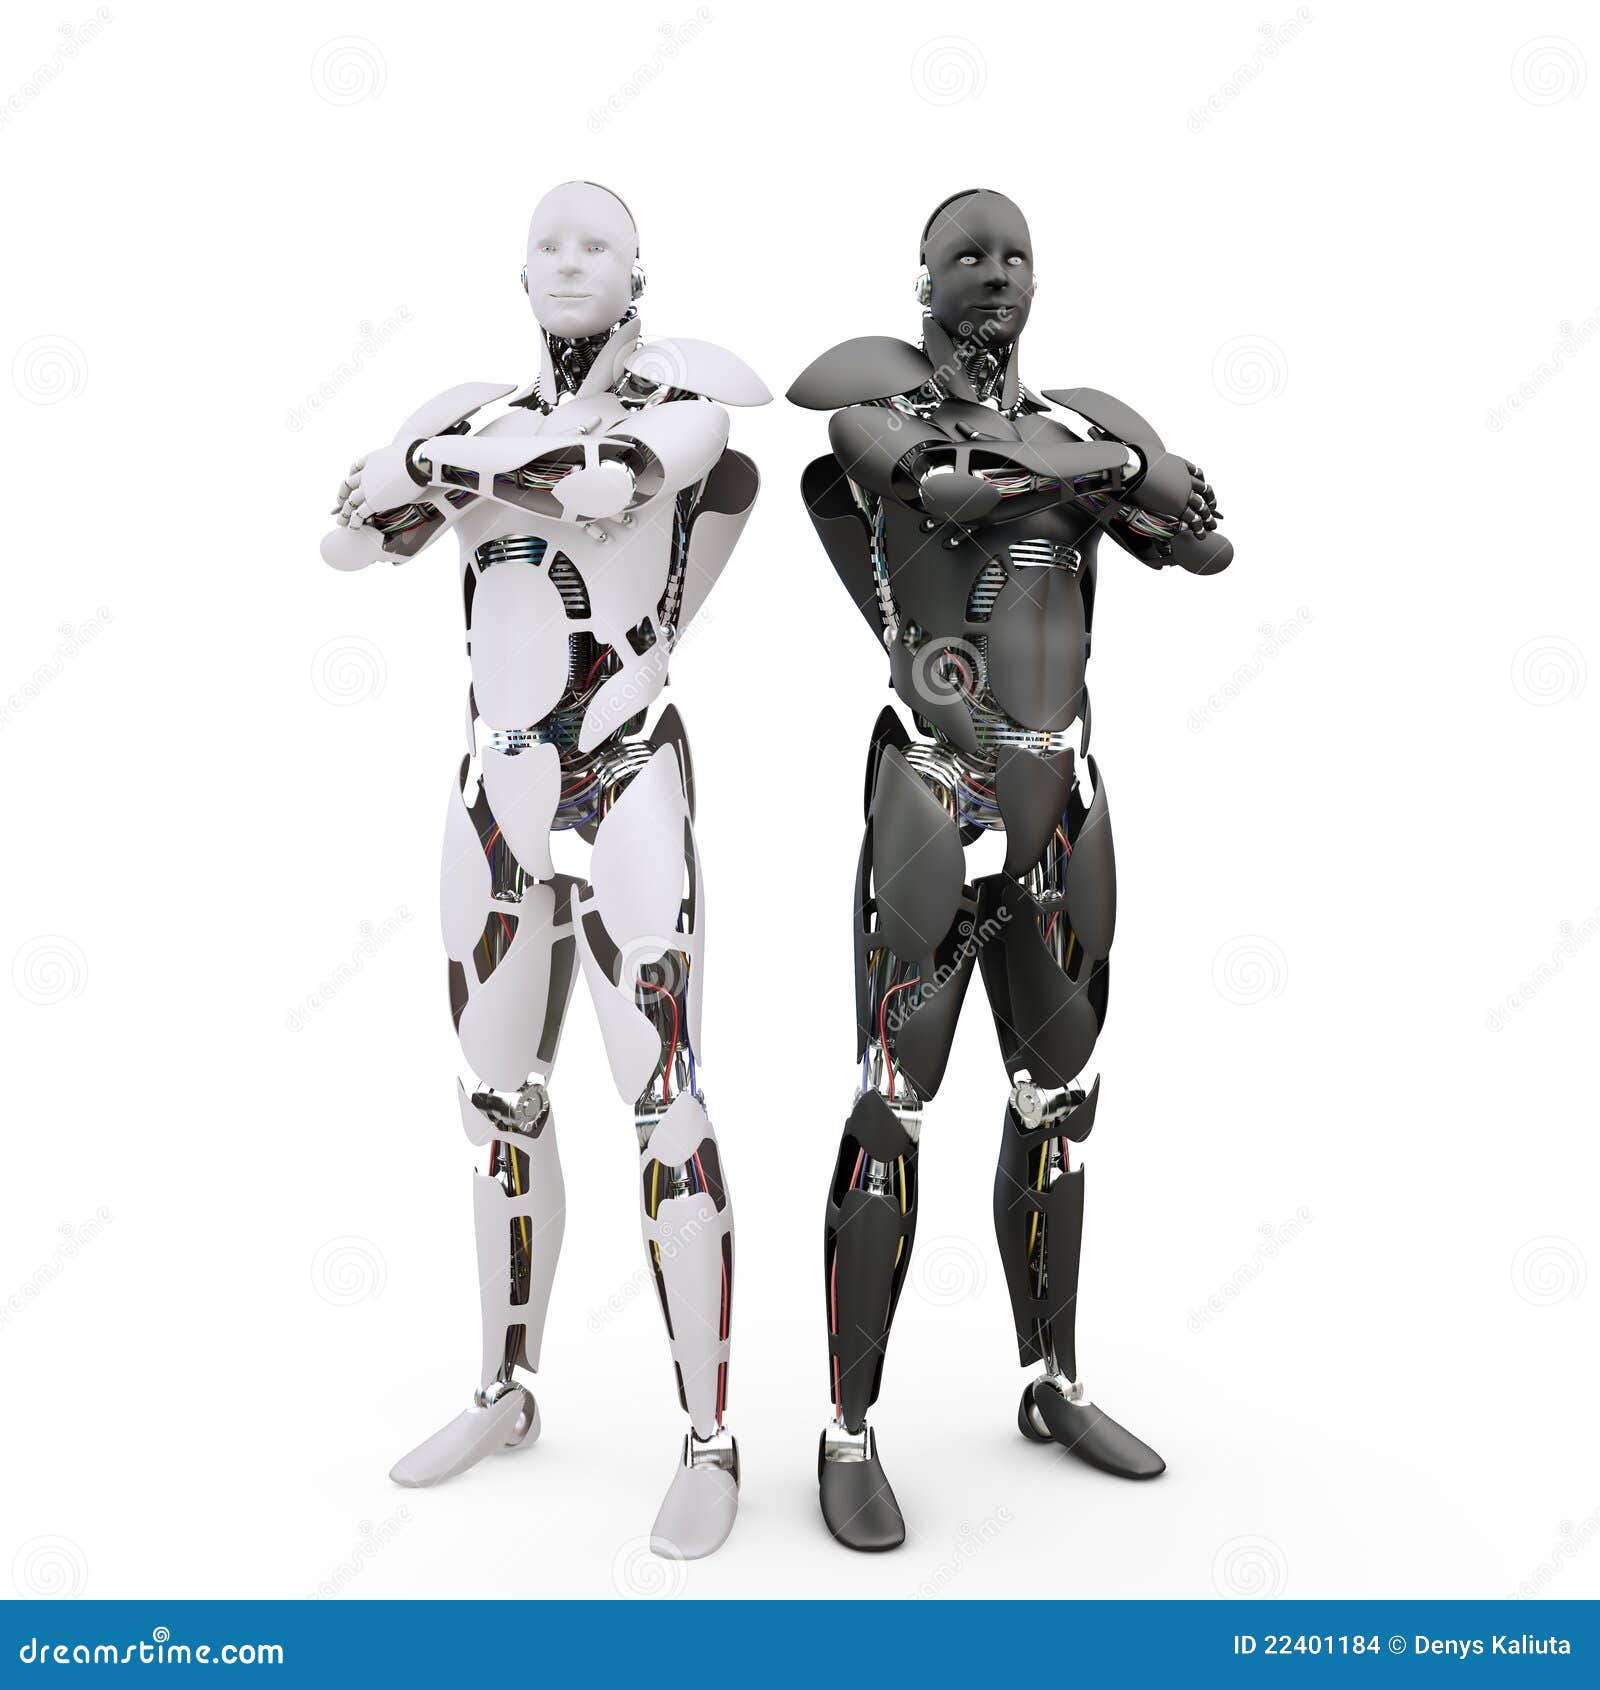 nederlaag oneerlijk Hoeveelheid van 2 robots stock illustration. Illustration of future, science - 22401184